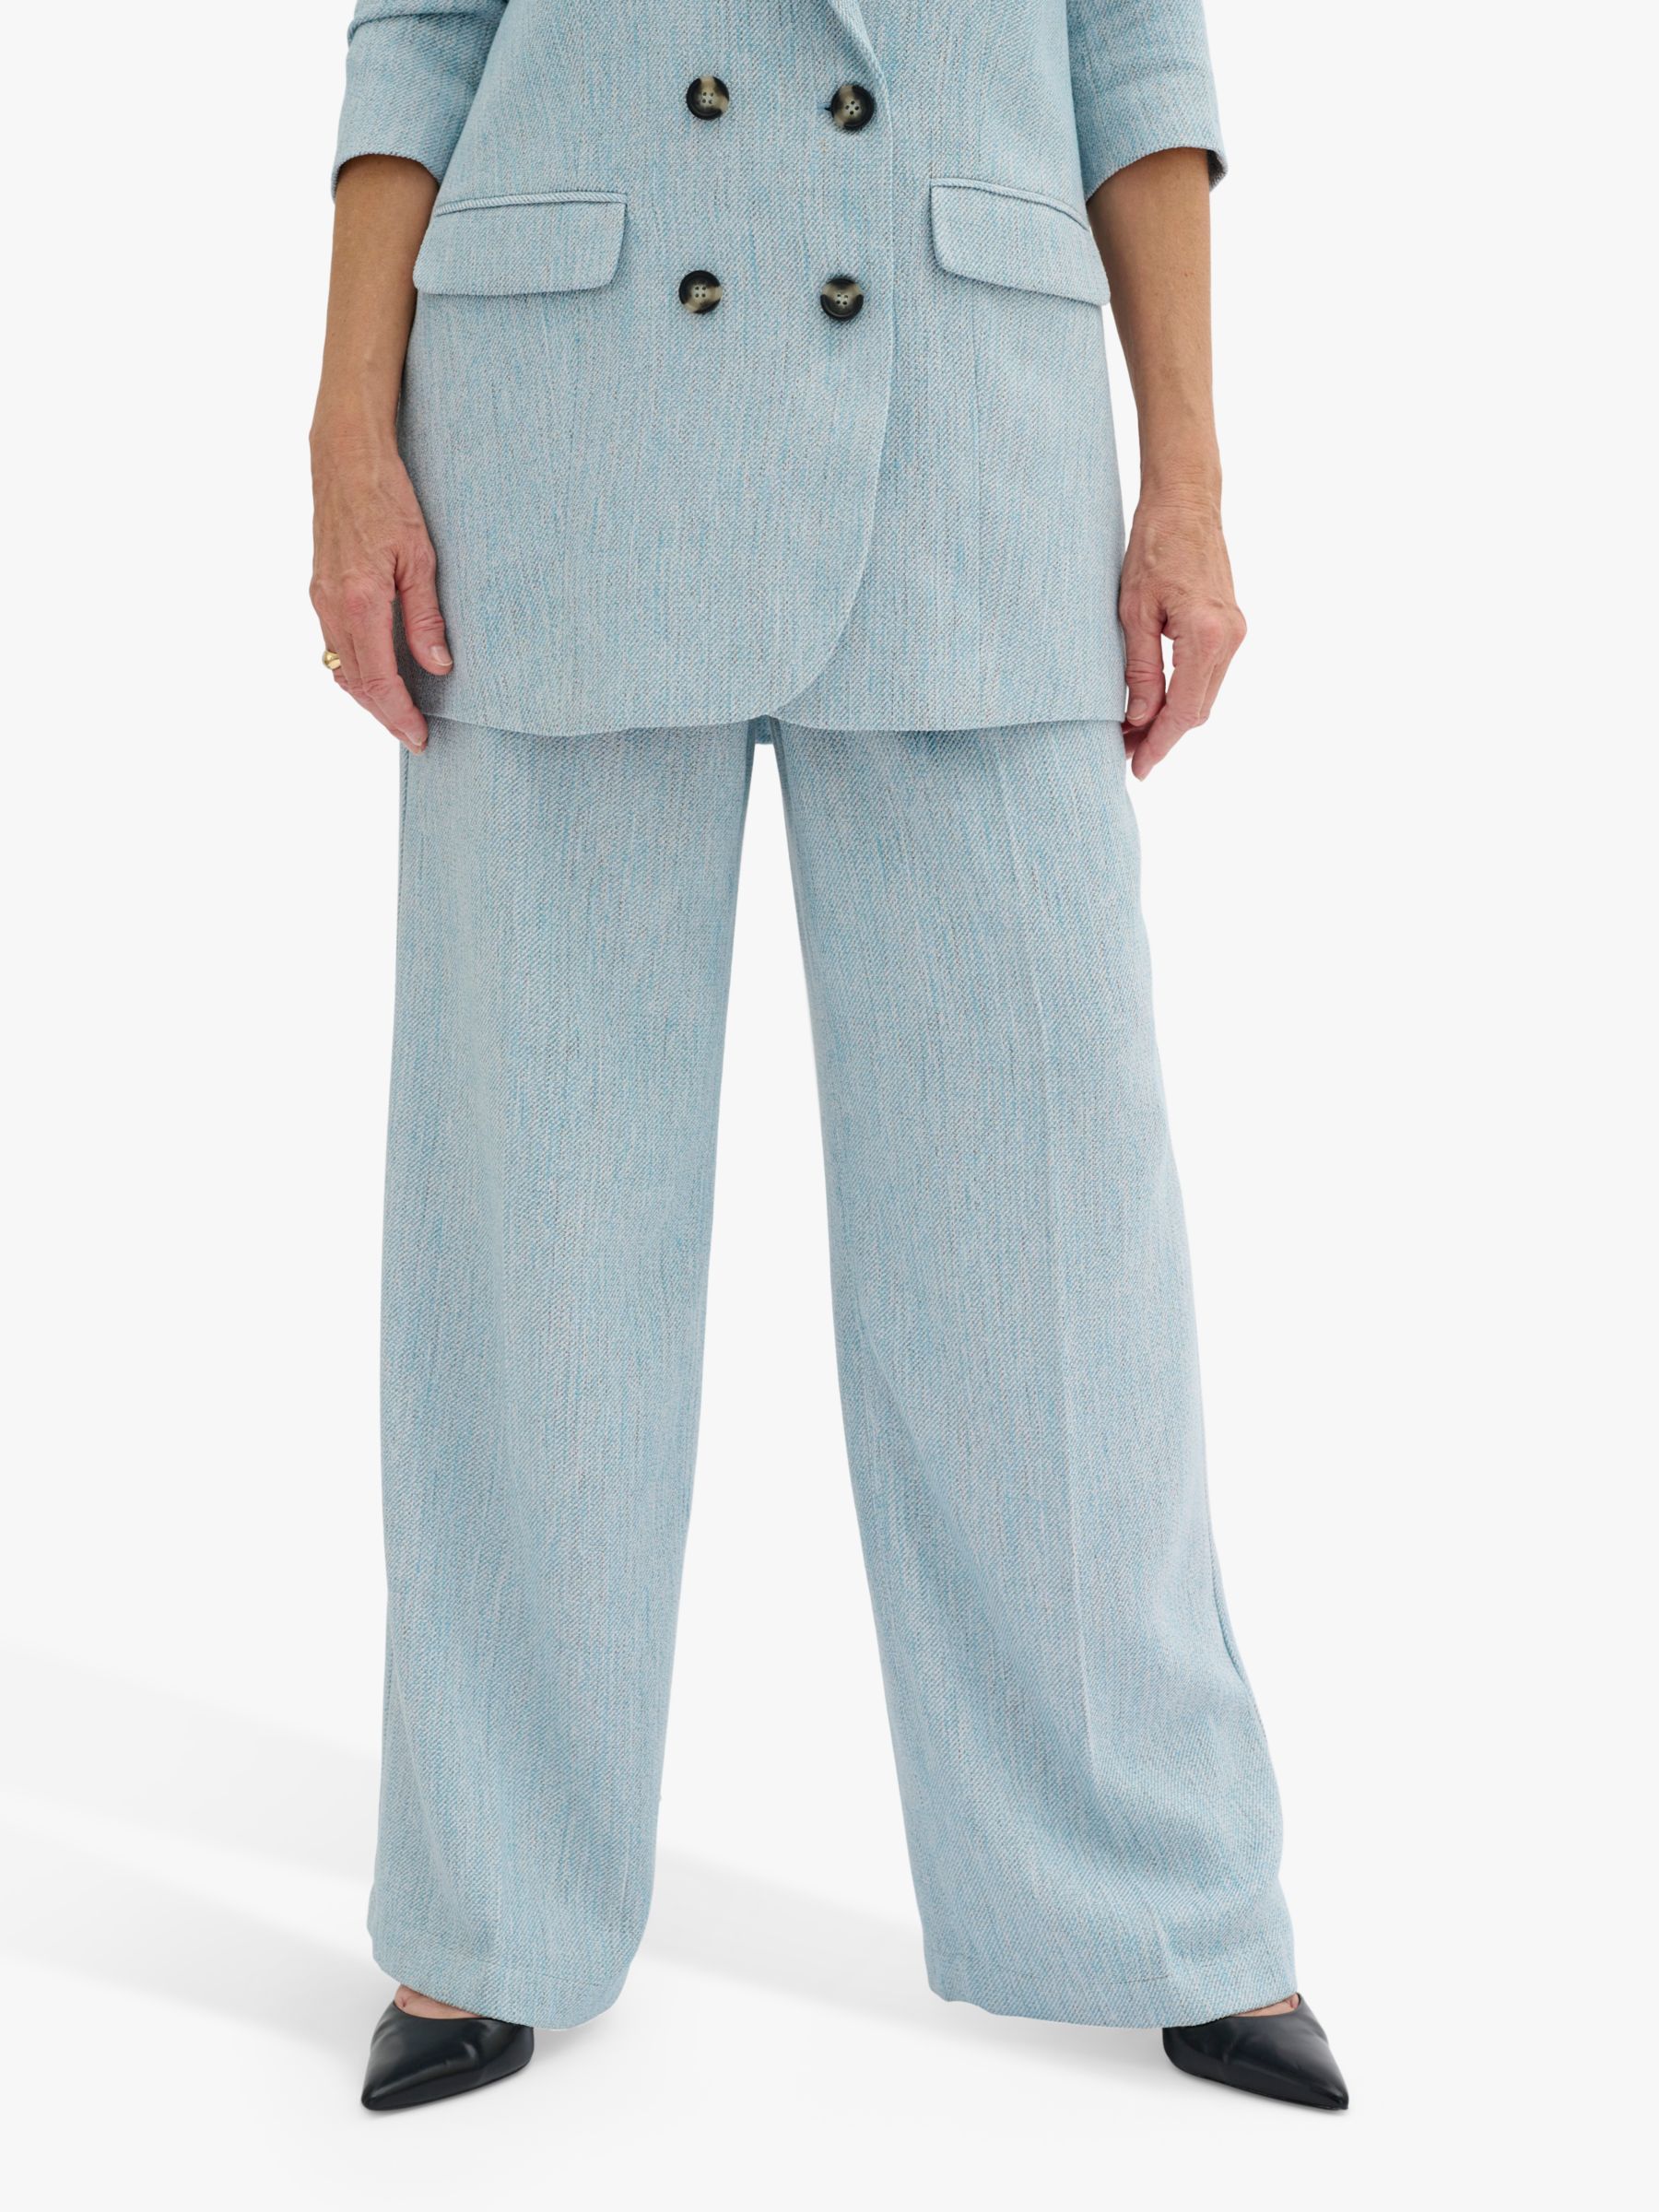 Light Blue Womens Trousers - Buy Light Blue Womens Trousers Online